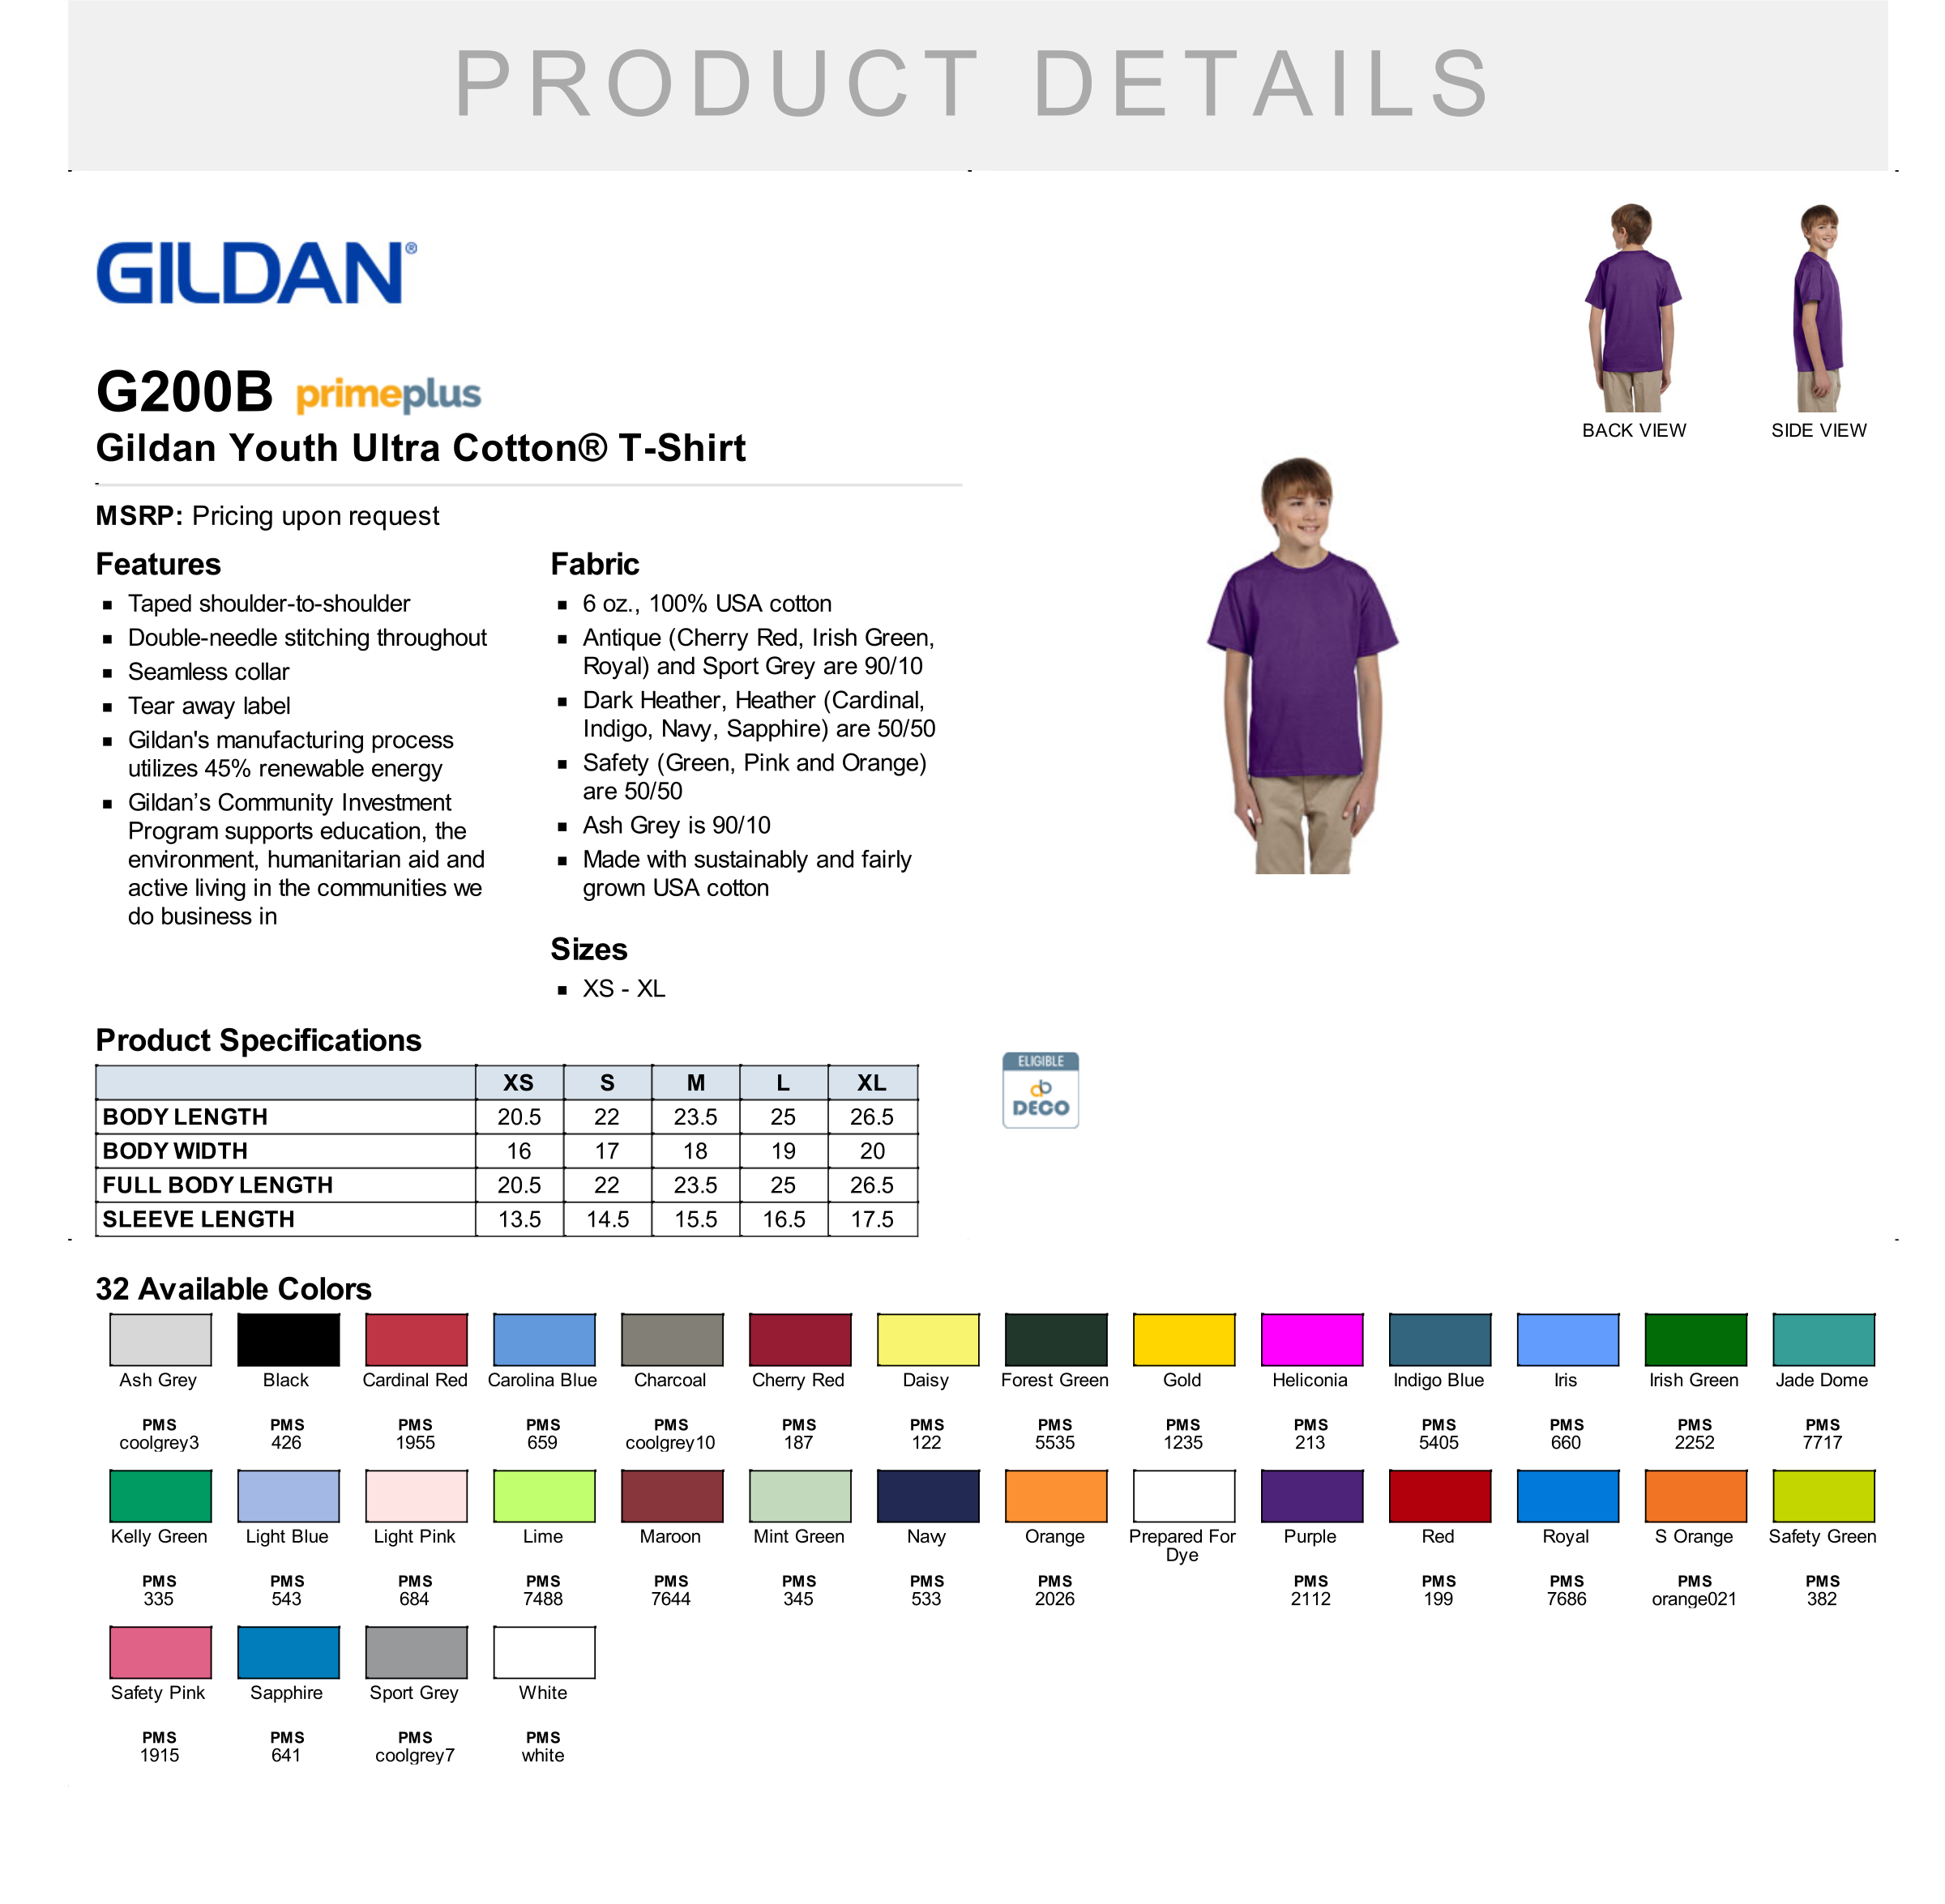 Dodgeland Youth Gildan Ultra Cotton® T-Shirt